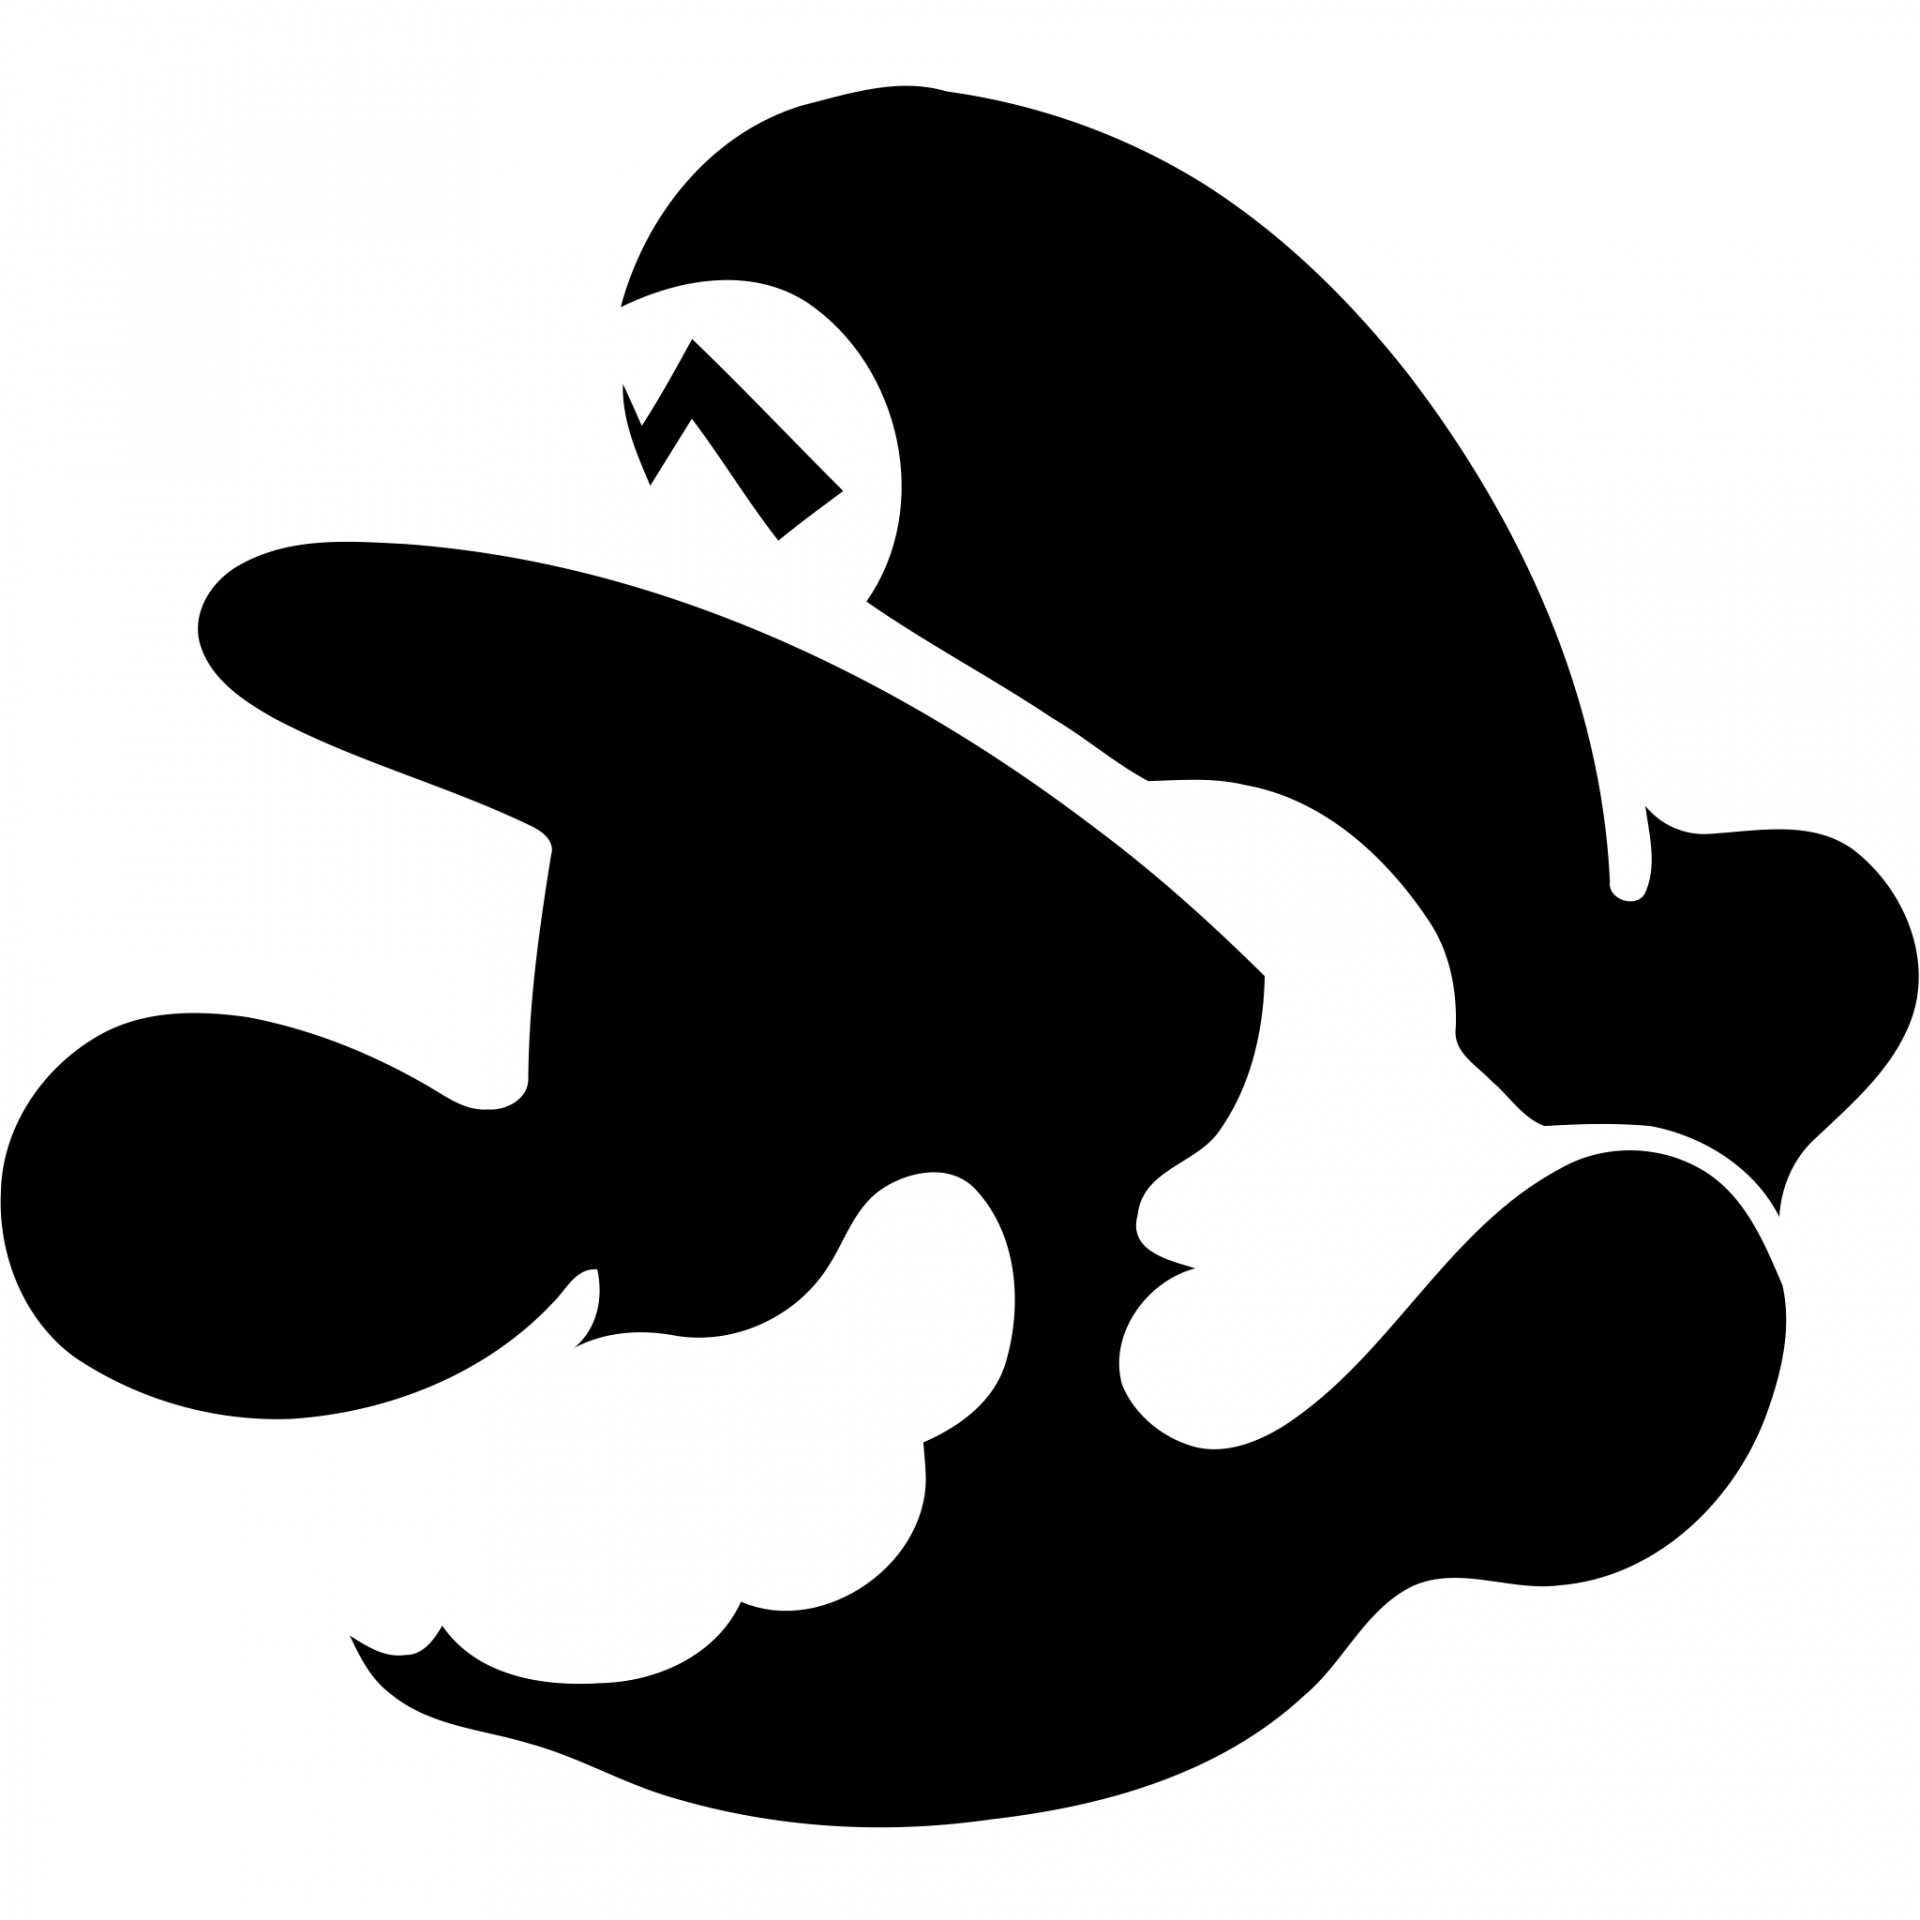 Super_Mario_Stencil_by_beraka